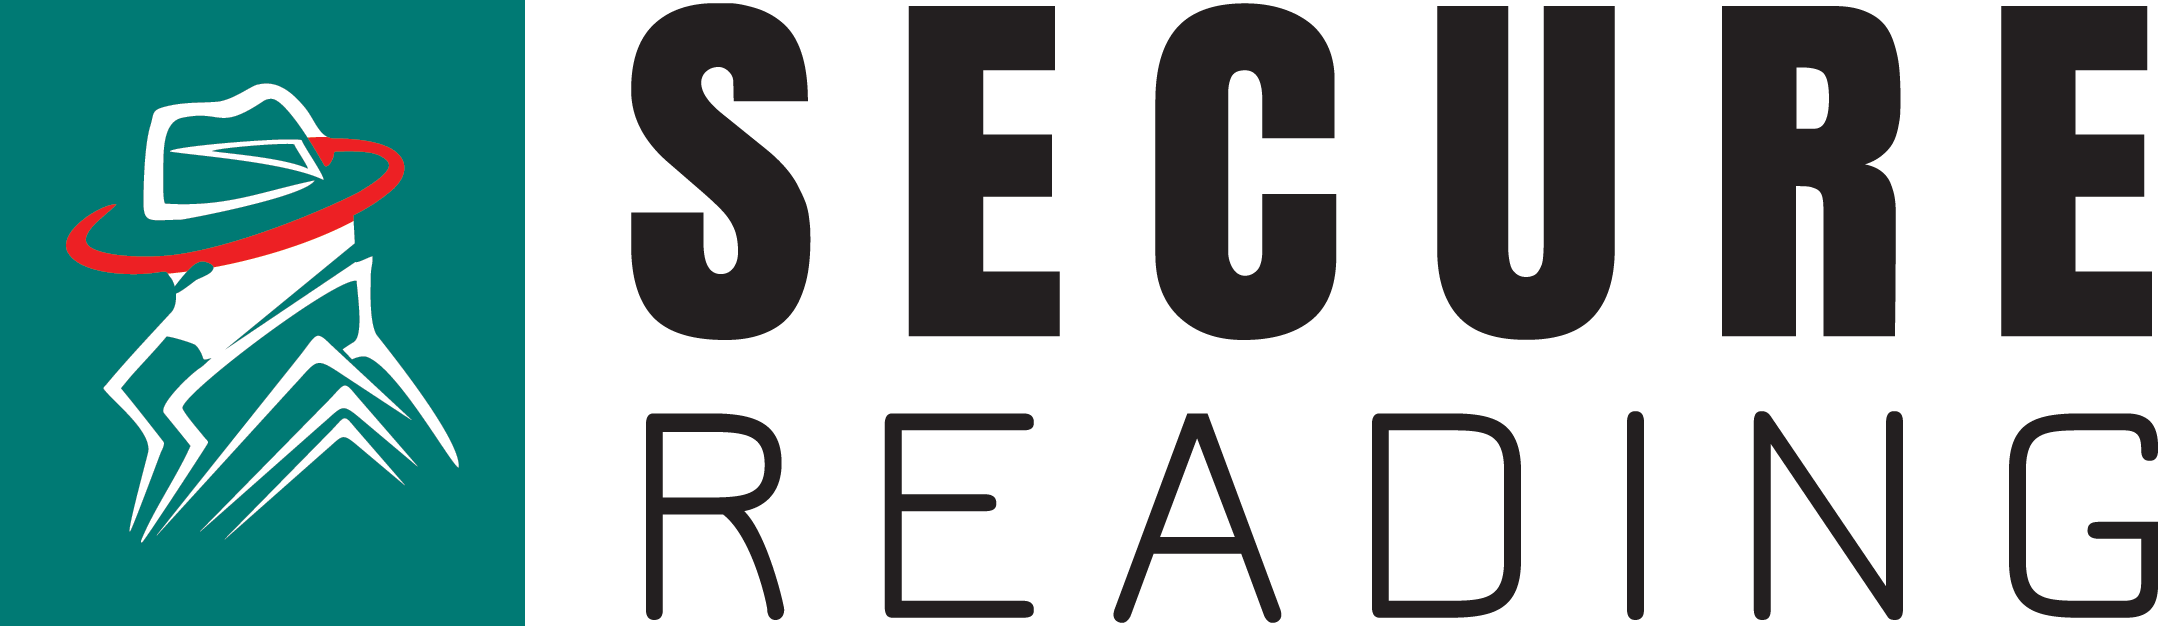 secure reading logo black